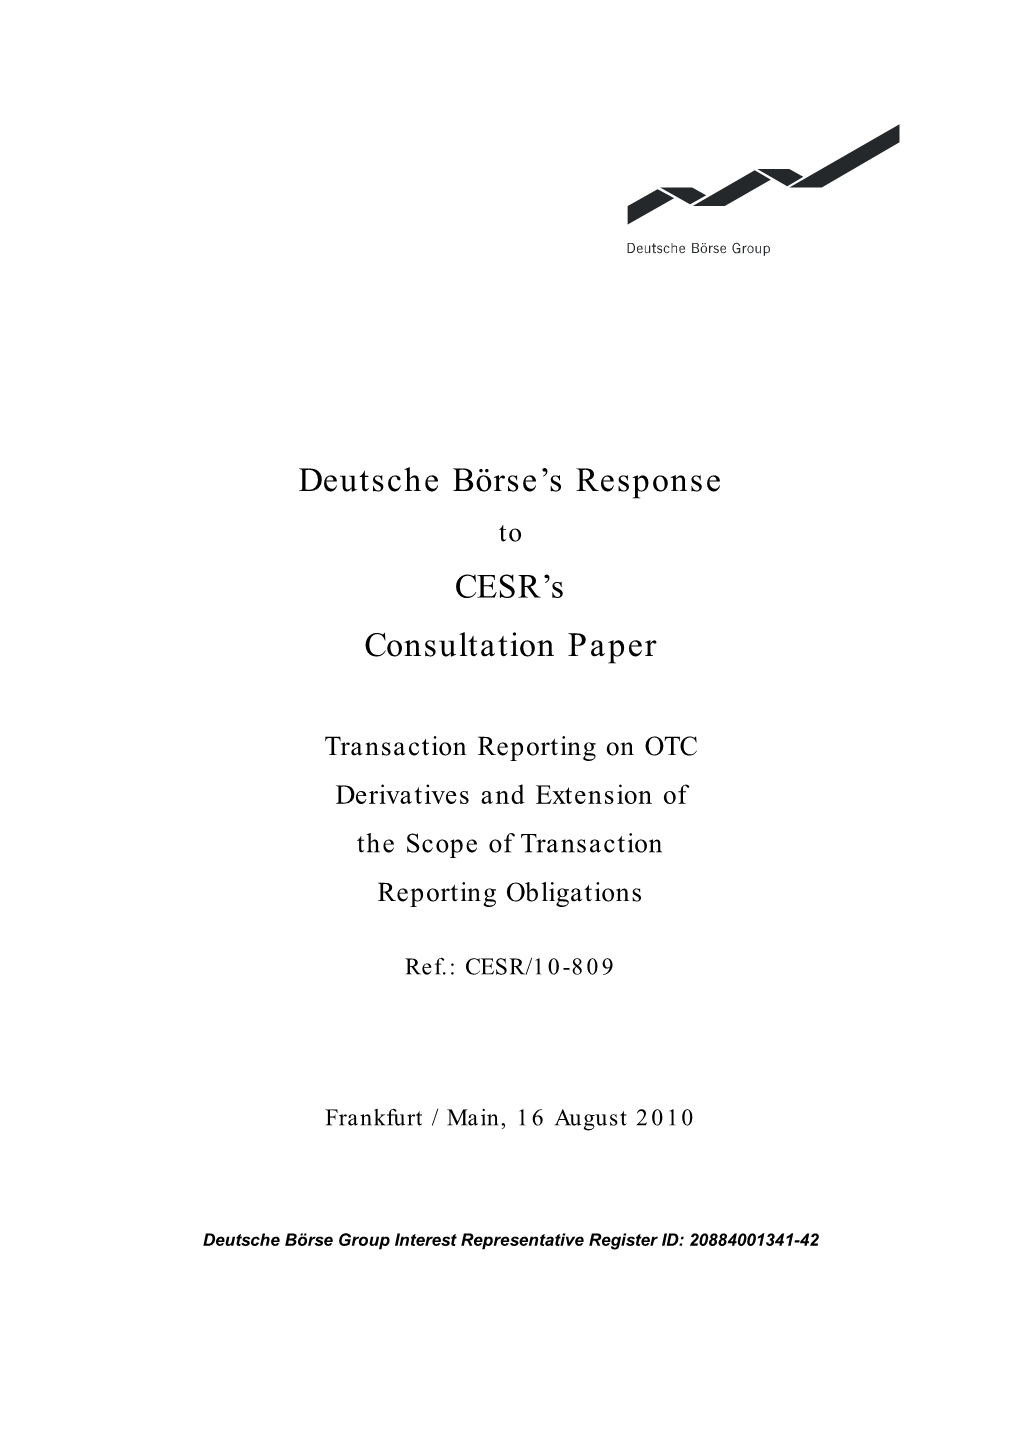 Deutsche Börse's Response CESR's Consultation Paper